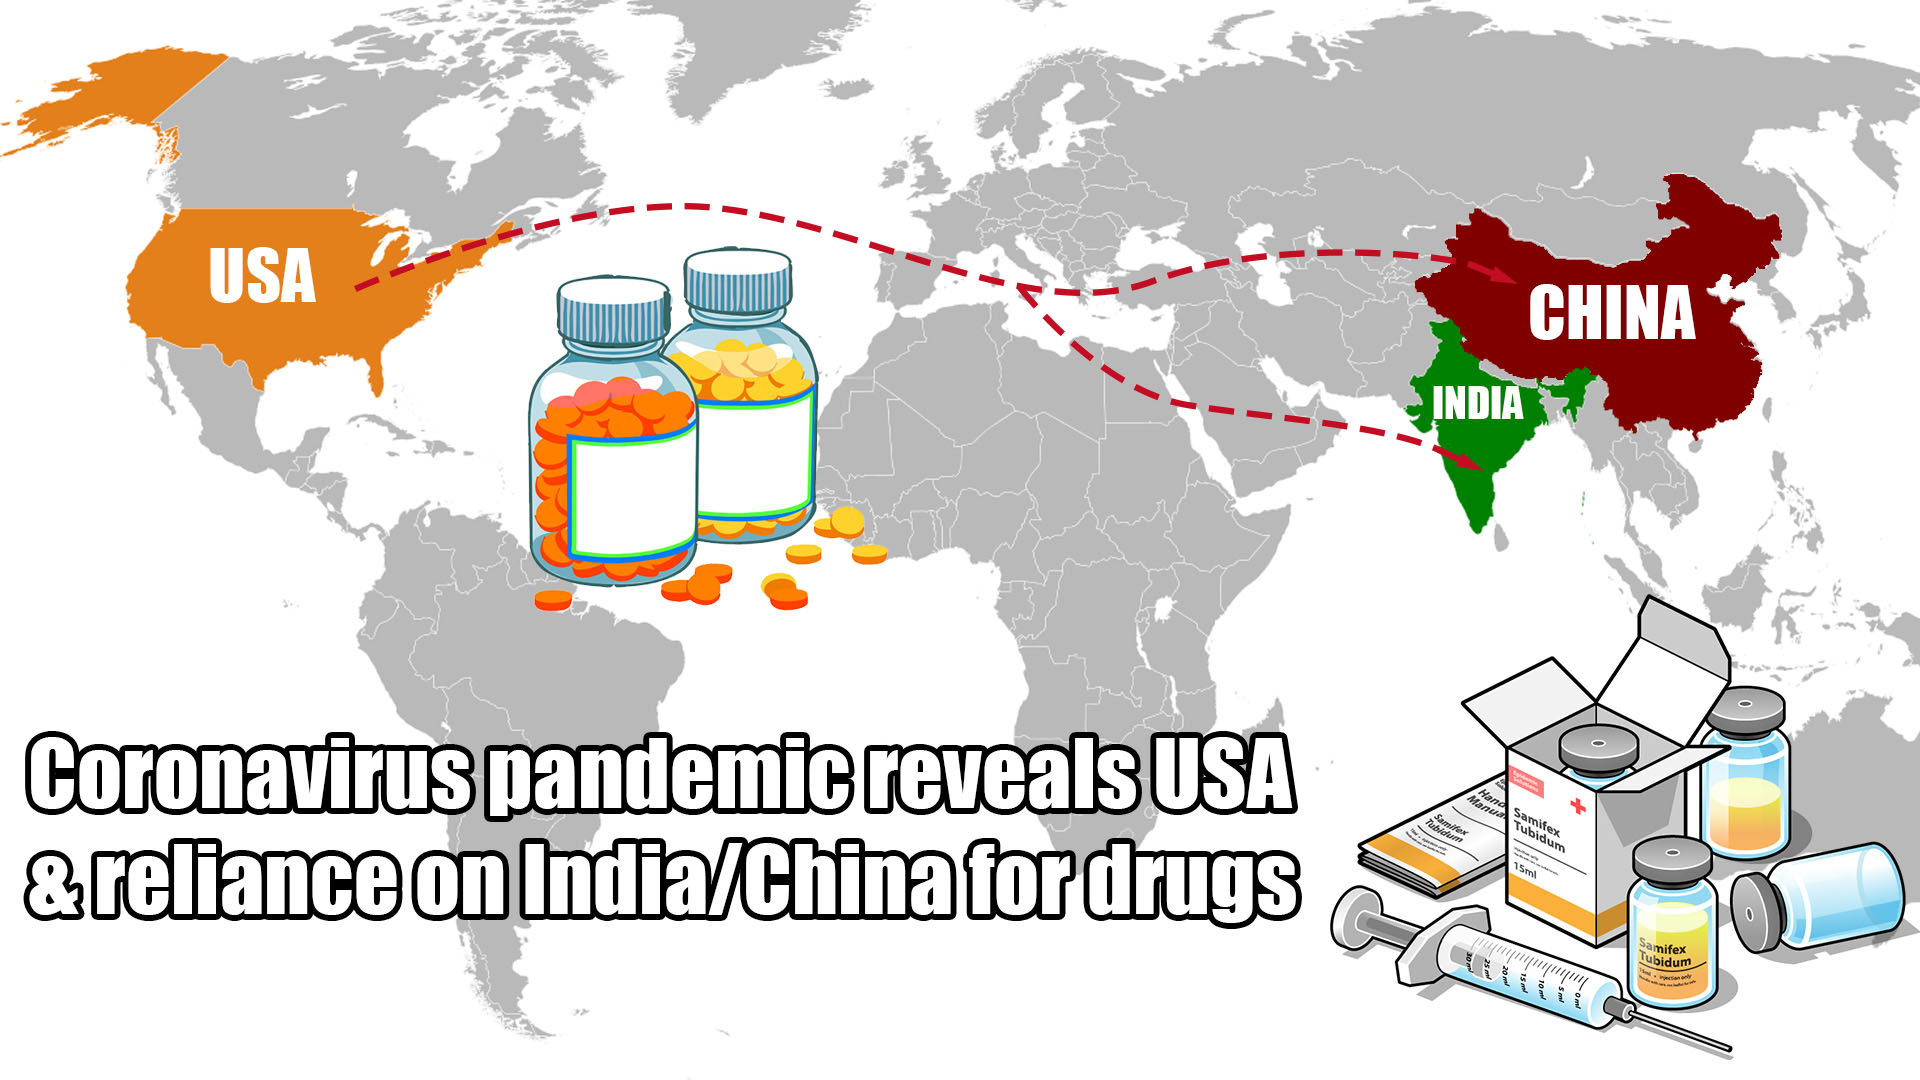 Corona virus pandemic reveals USA's reliance on India/China for drugs